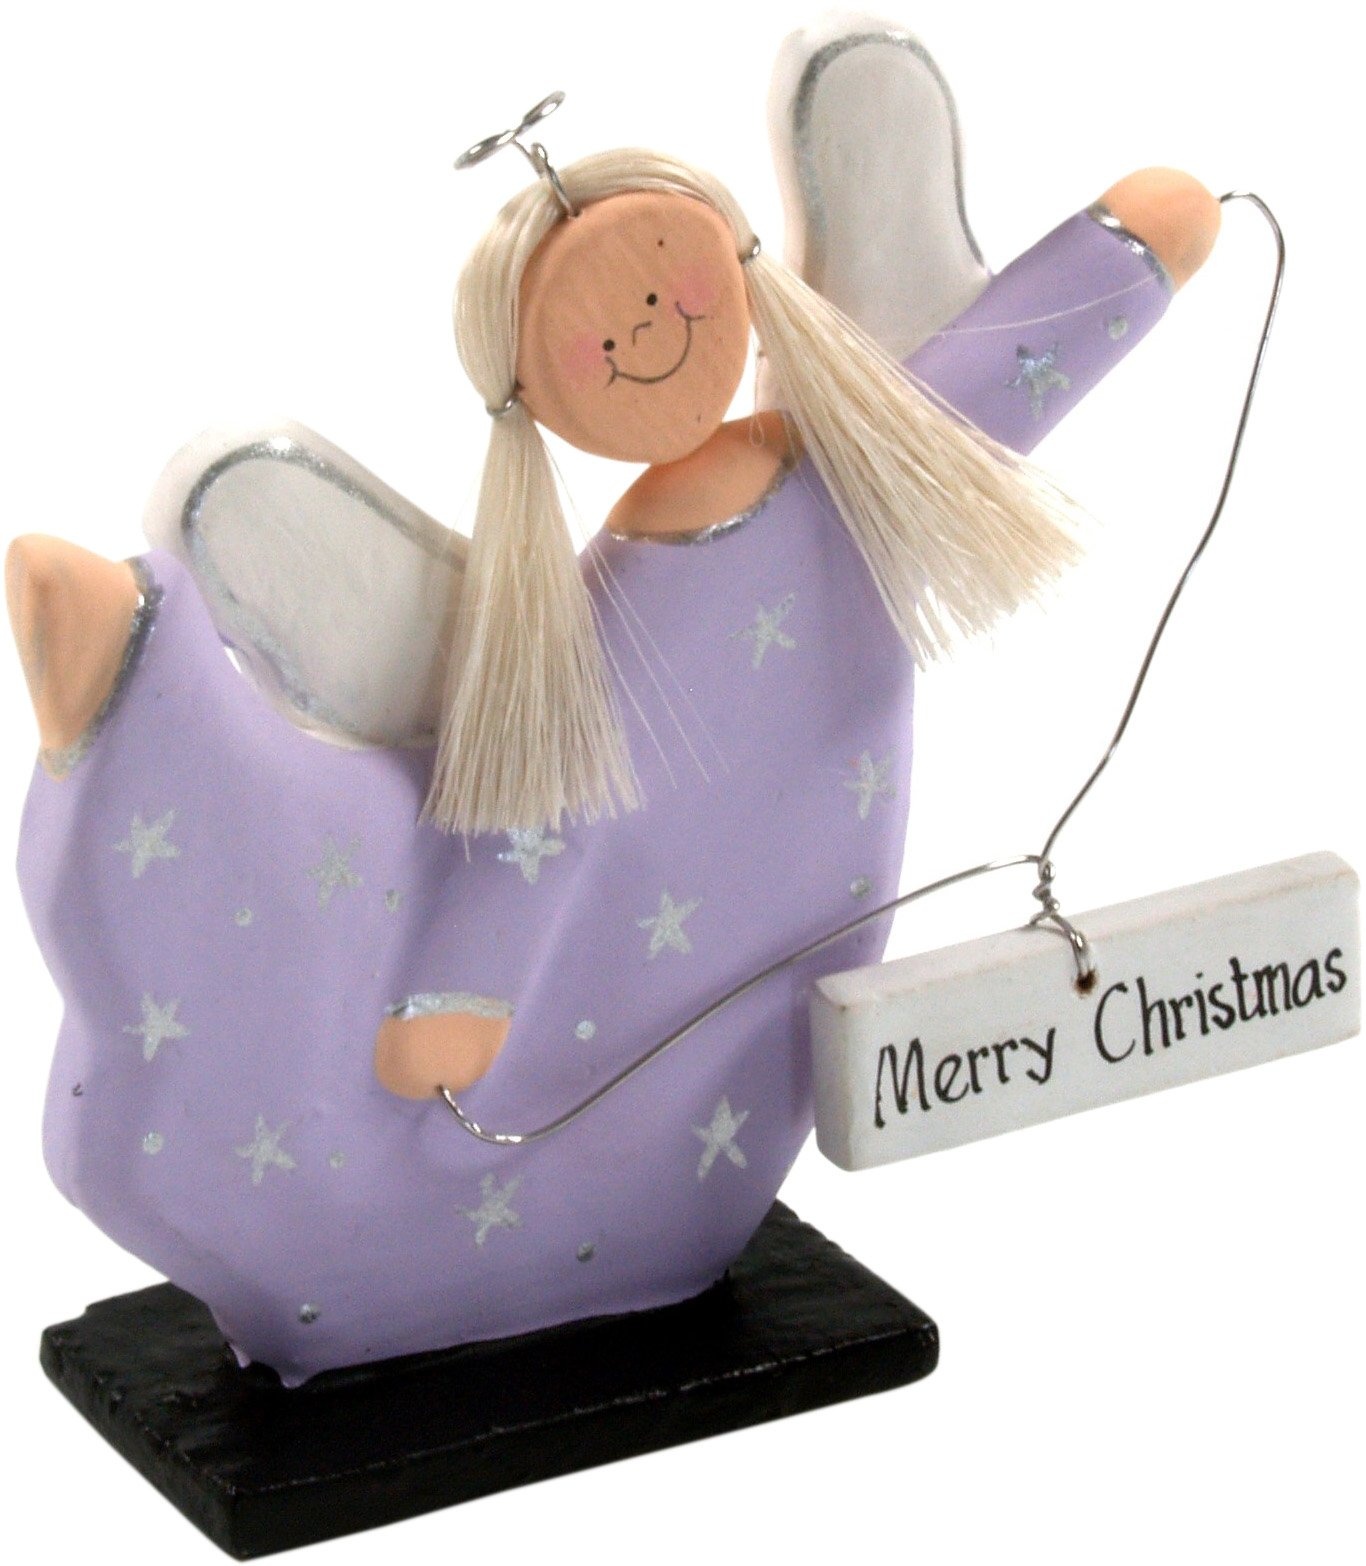 GURU SHOP Weihnachtsengel, Christbaumschmuck ` Merry Christmas`, Lila, Farbe: Lila, 9x9x2 cm, Weihnachtsdeko